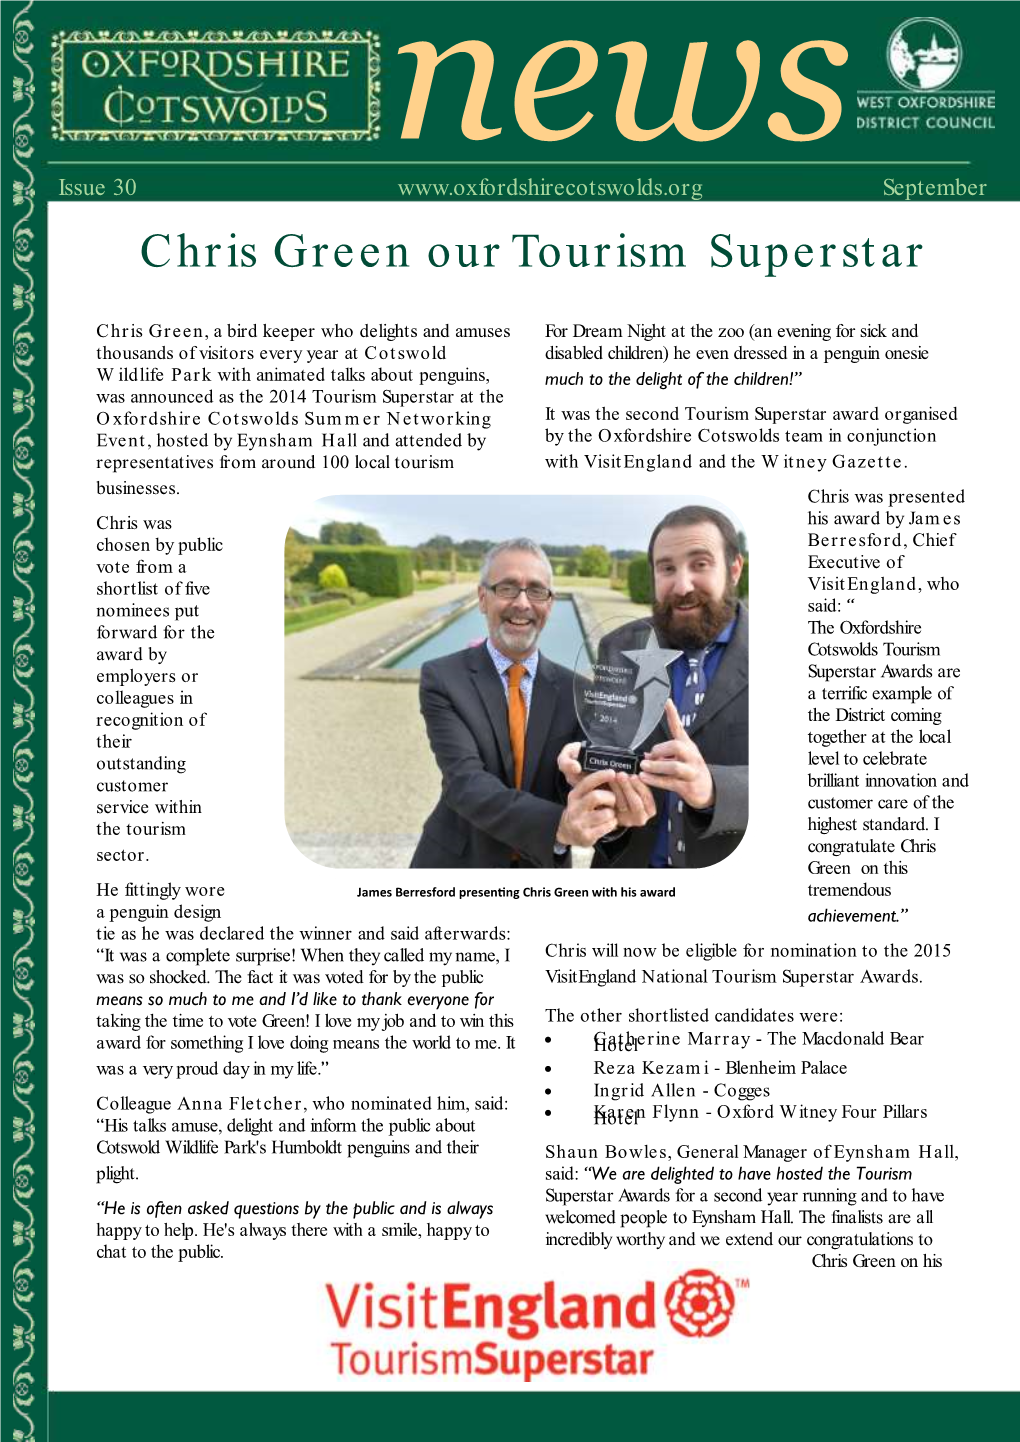 Chris Green Our Tourism Superstar